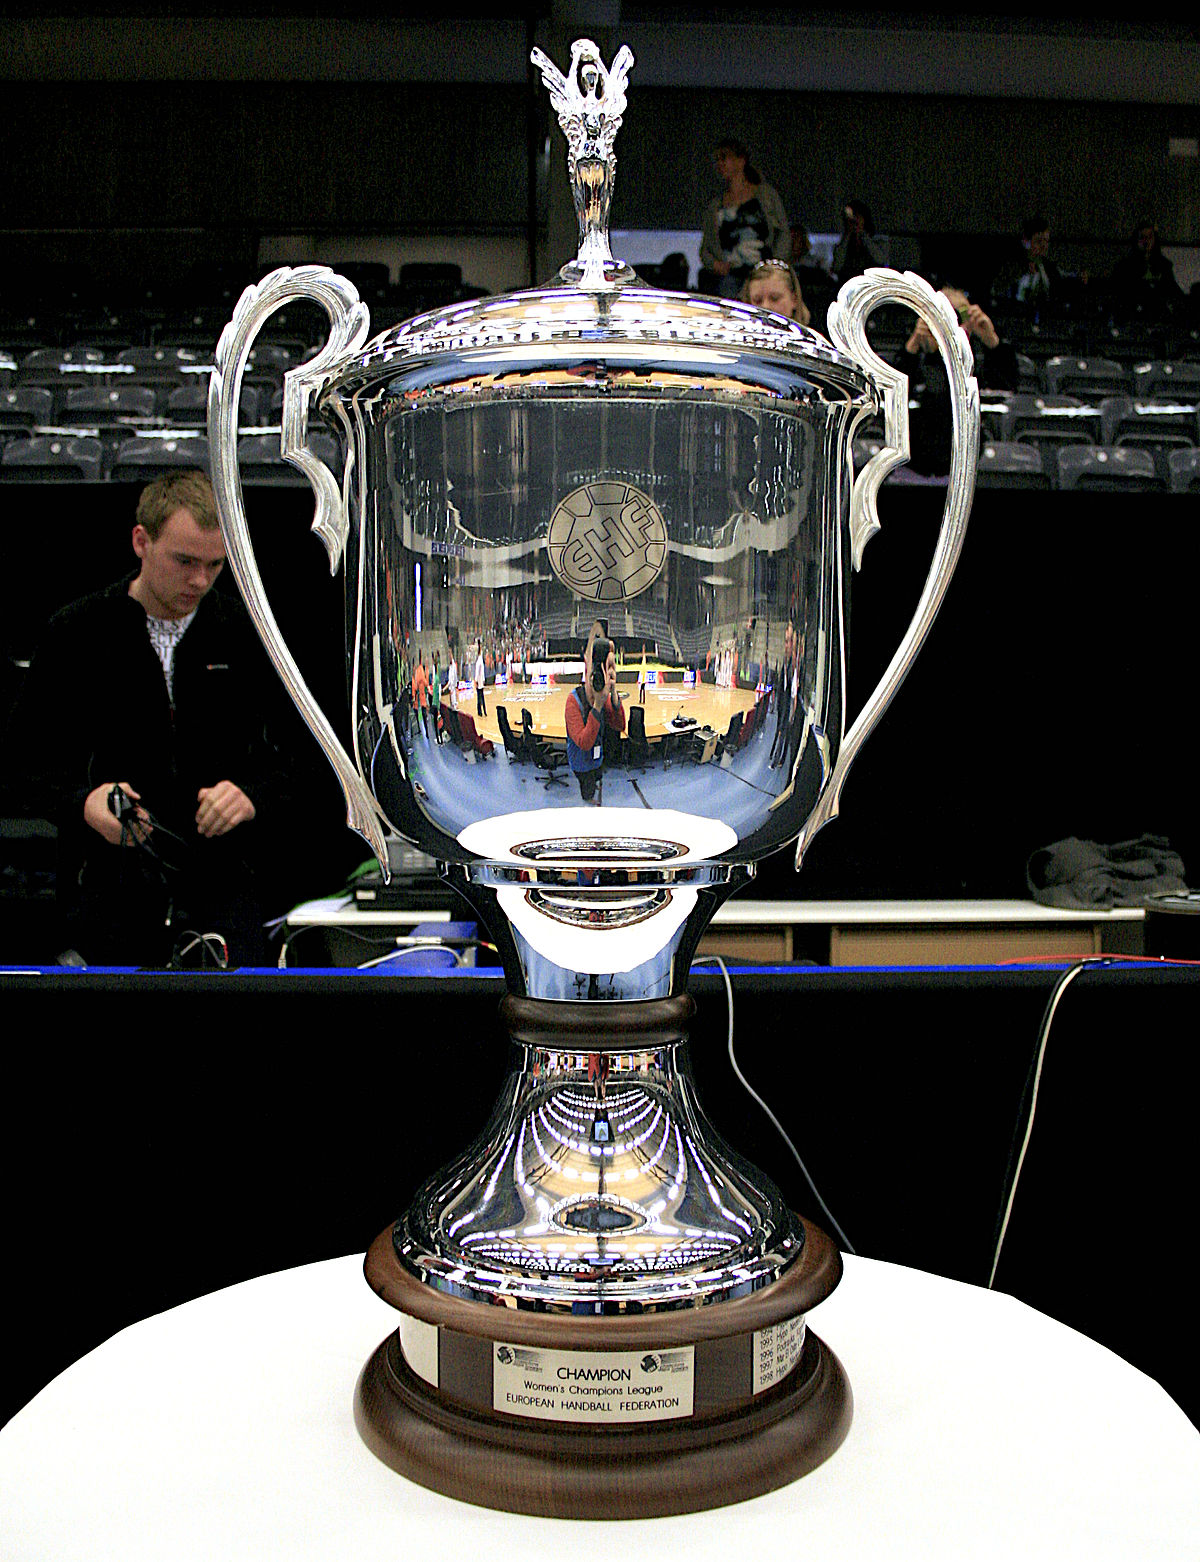 2021–22 Women's EHF Champions League - Wikipedia